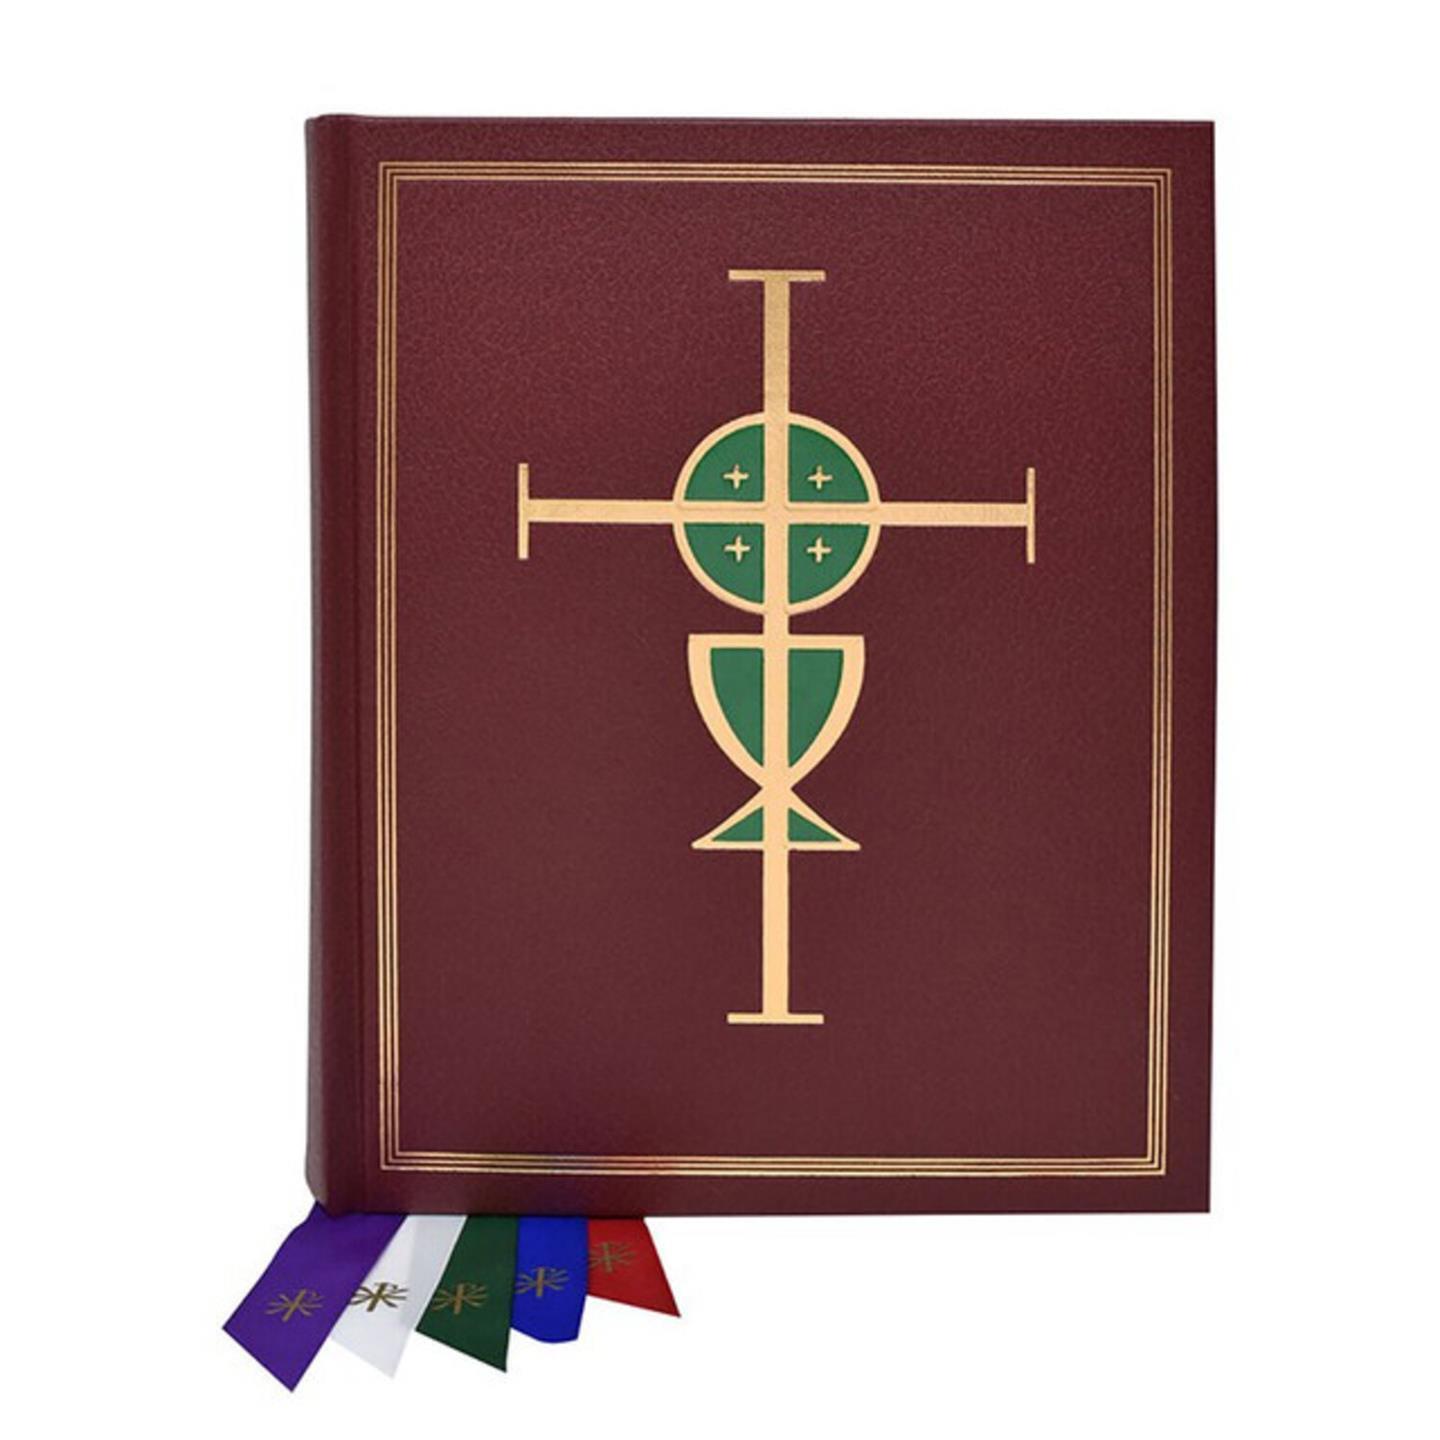 Roman Missal Third Edition - Altar Size Clothbound Size:Altar Clothbound Edition